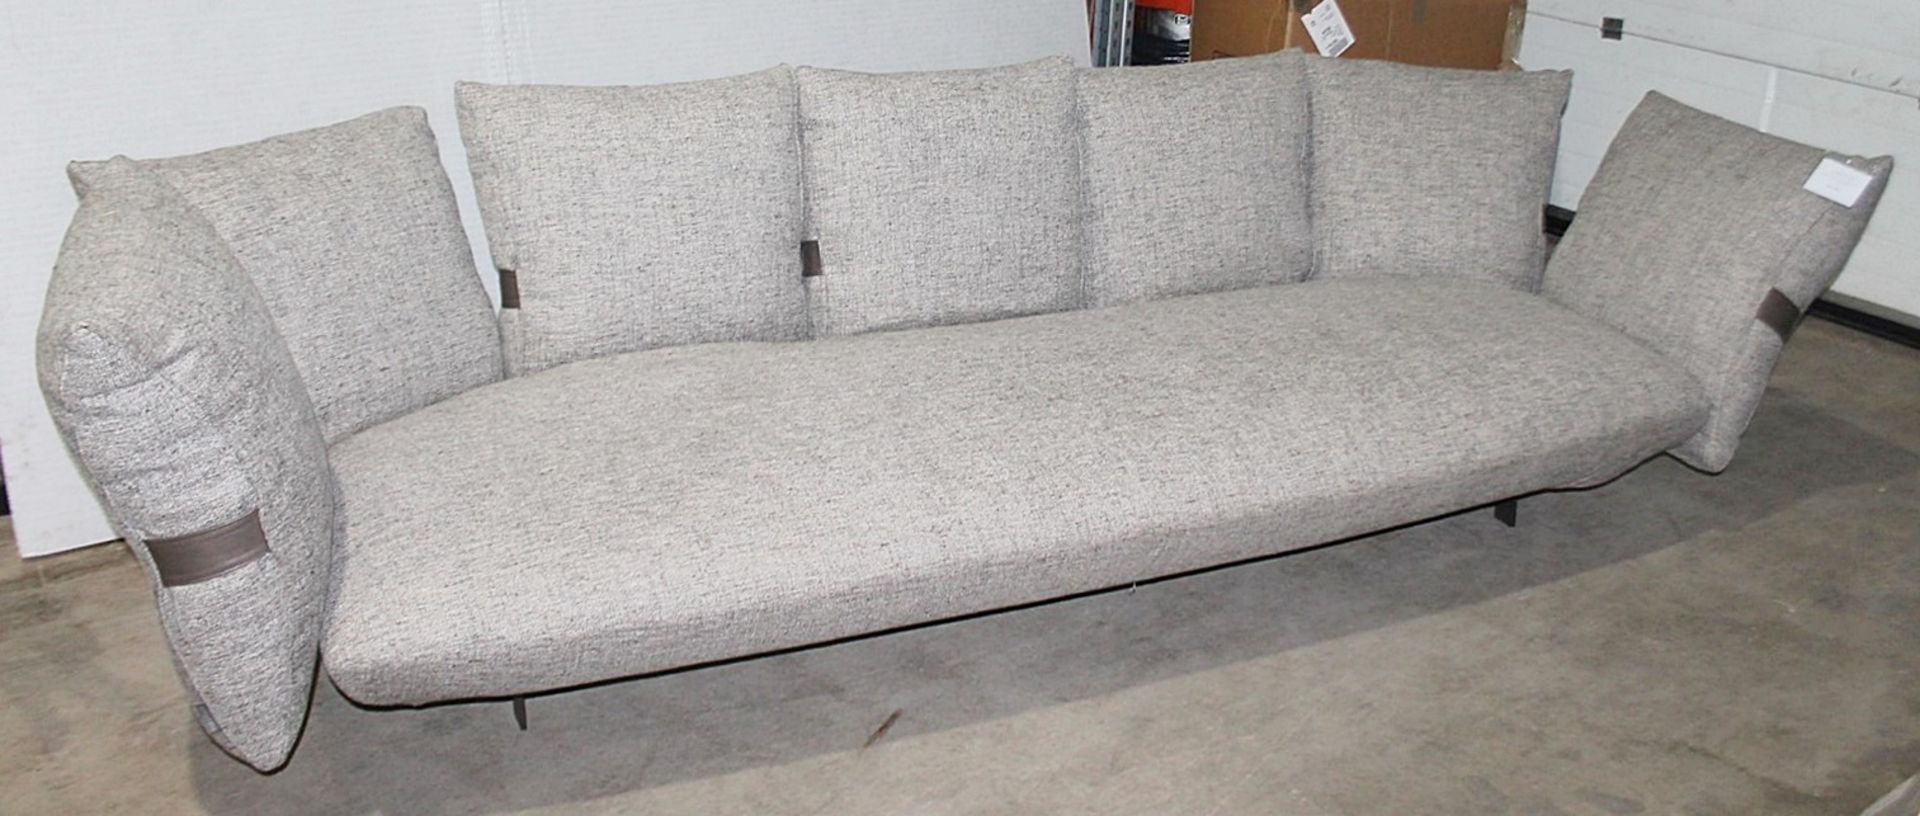 1 x ARKETIPO 'Smooth Operator' Luxury 7-Cushion / 3-Seater Sofa - Original Price £9,107 - Image 11 of 11